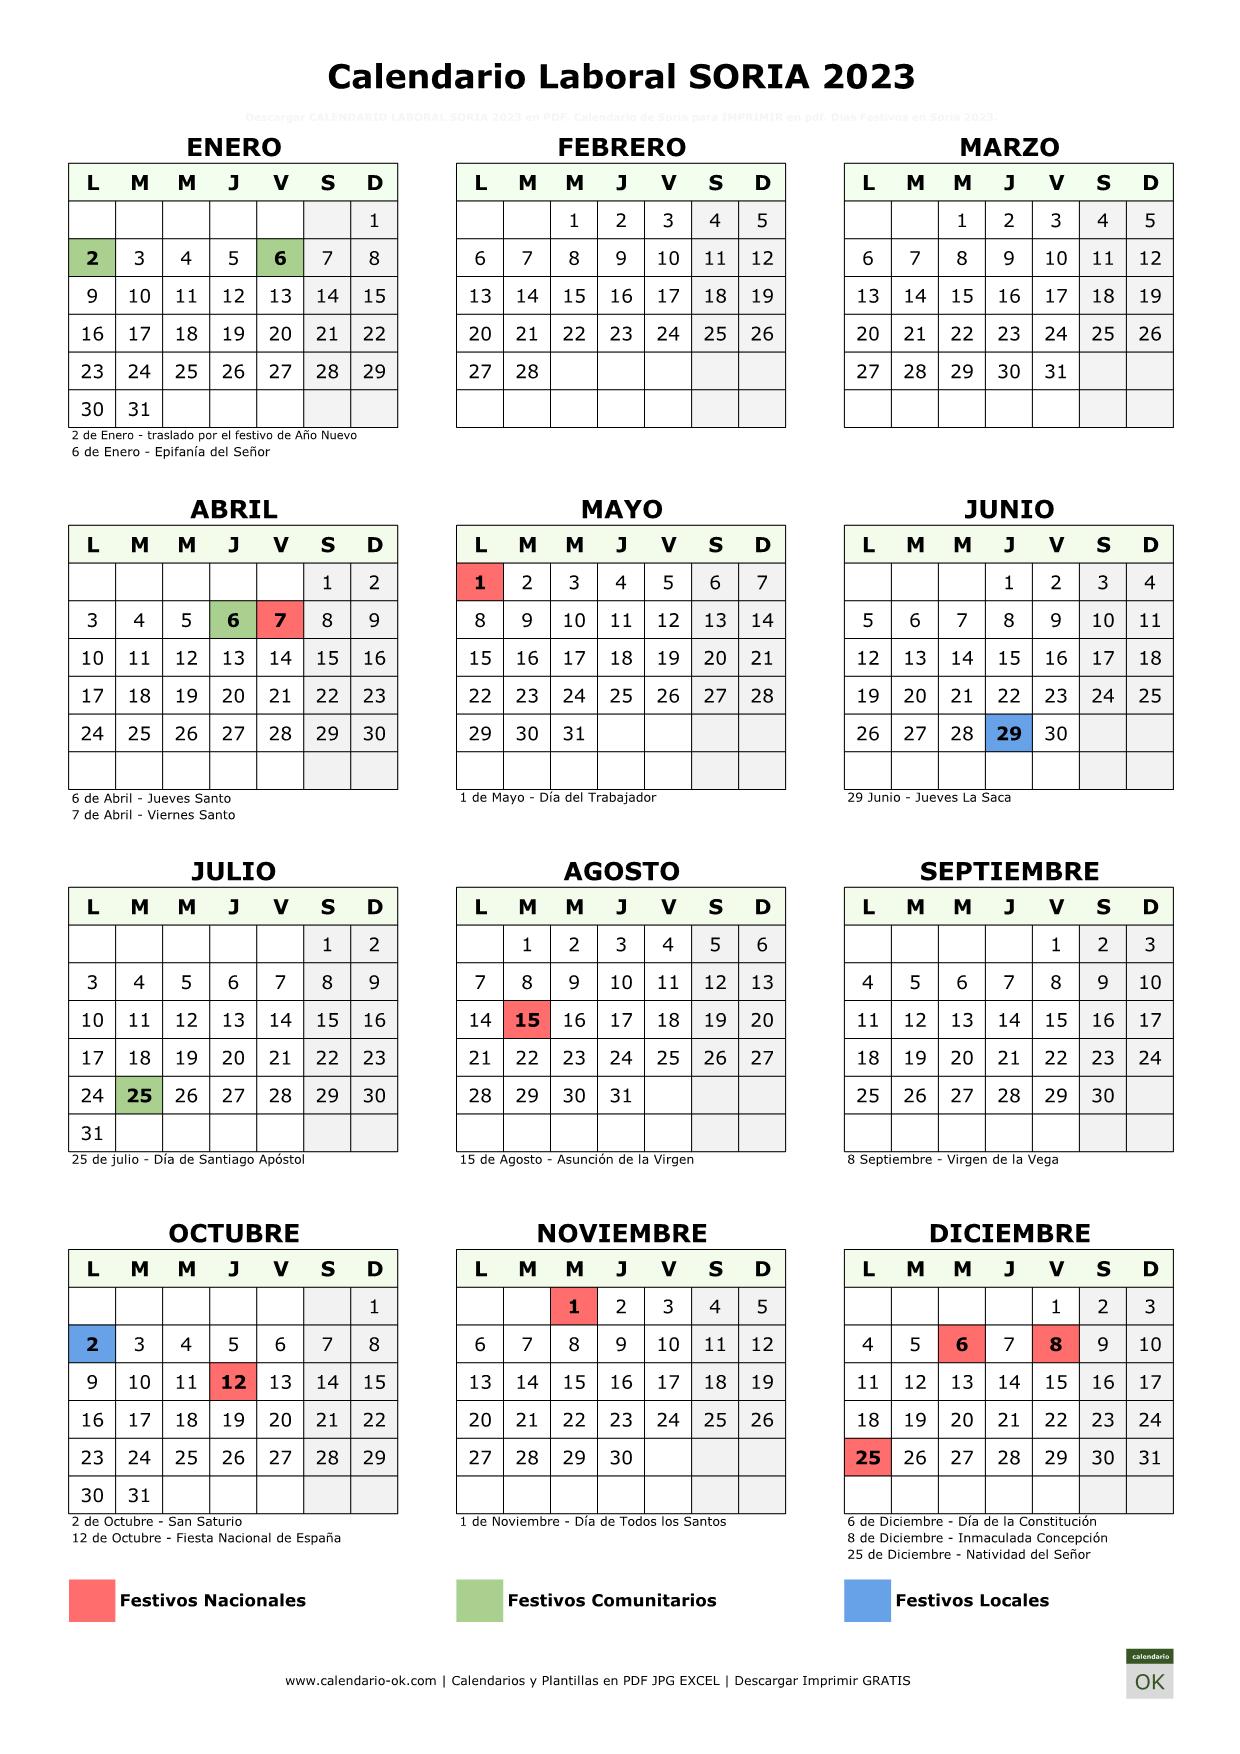 Calendario Laboral Soria 2023 vertical